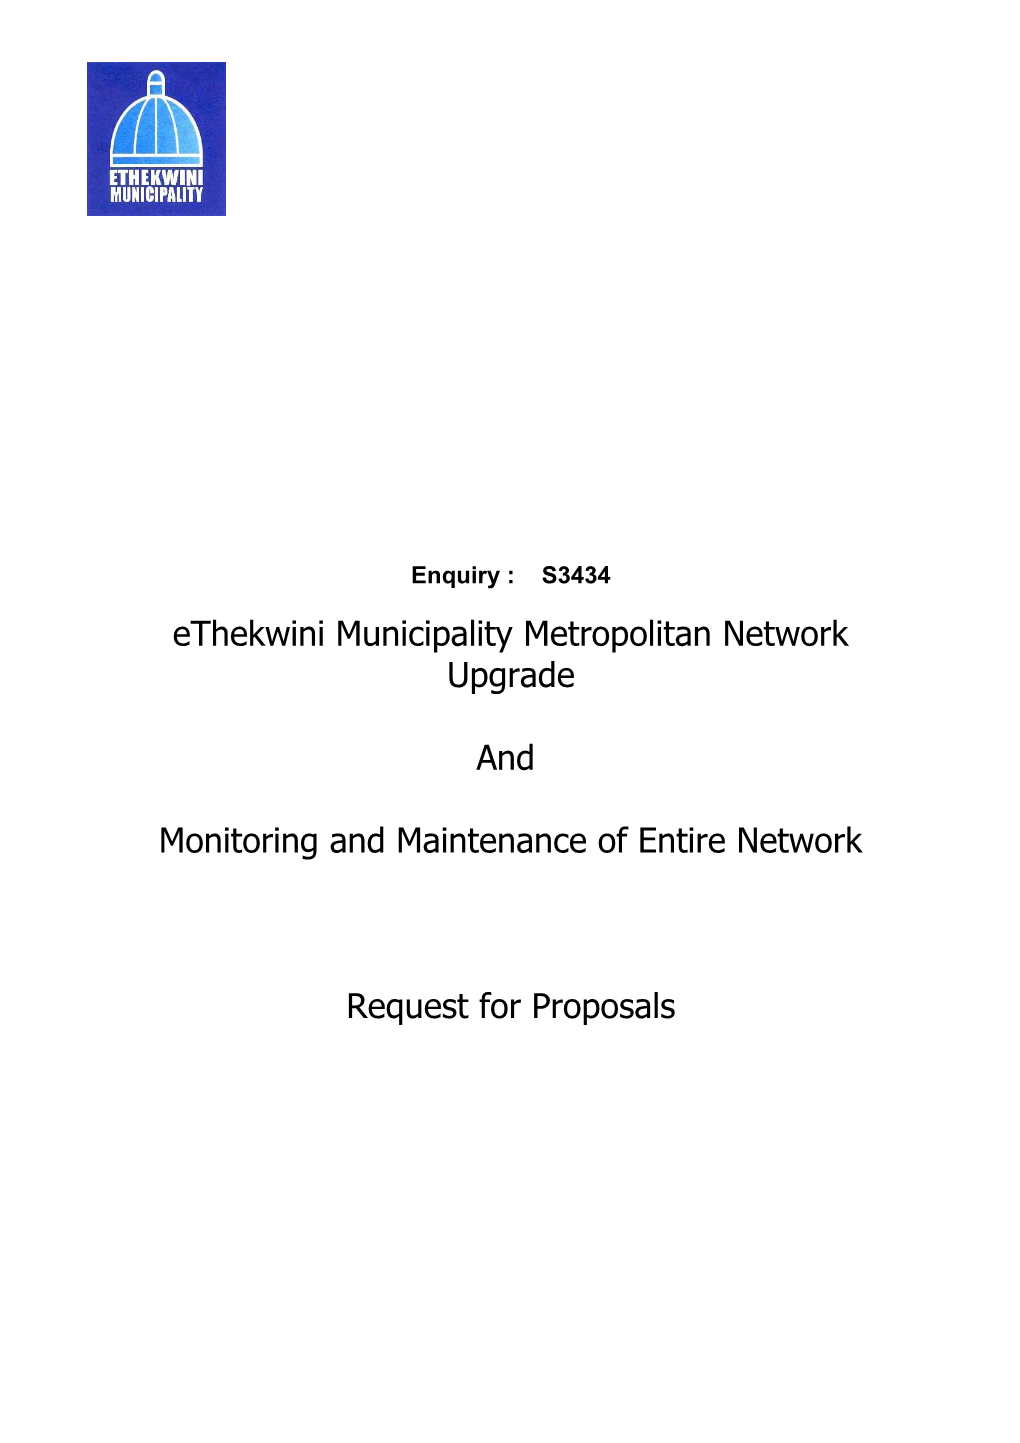 Ethekwini Municipality Metropolitan Network